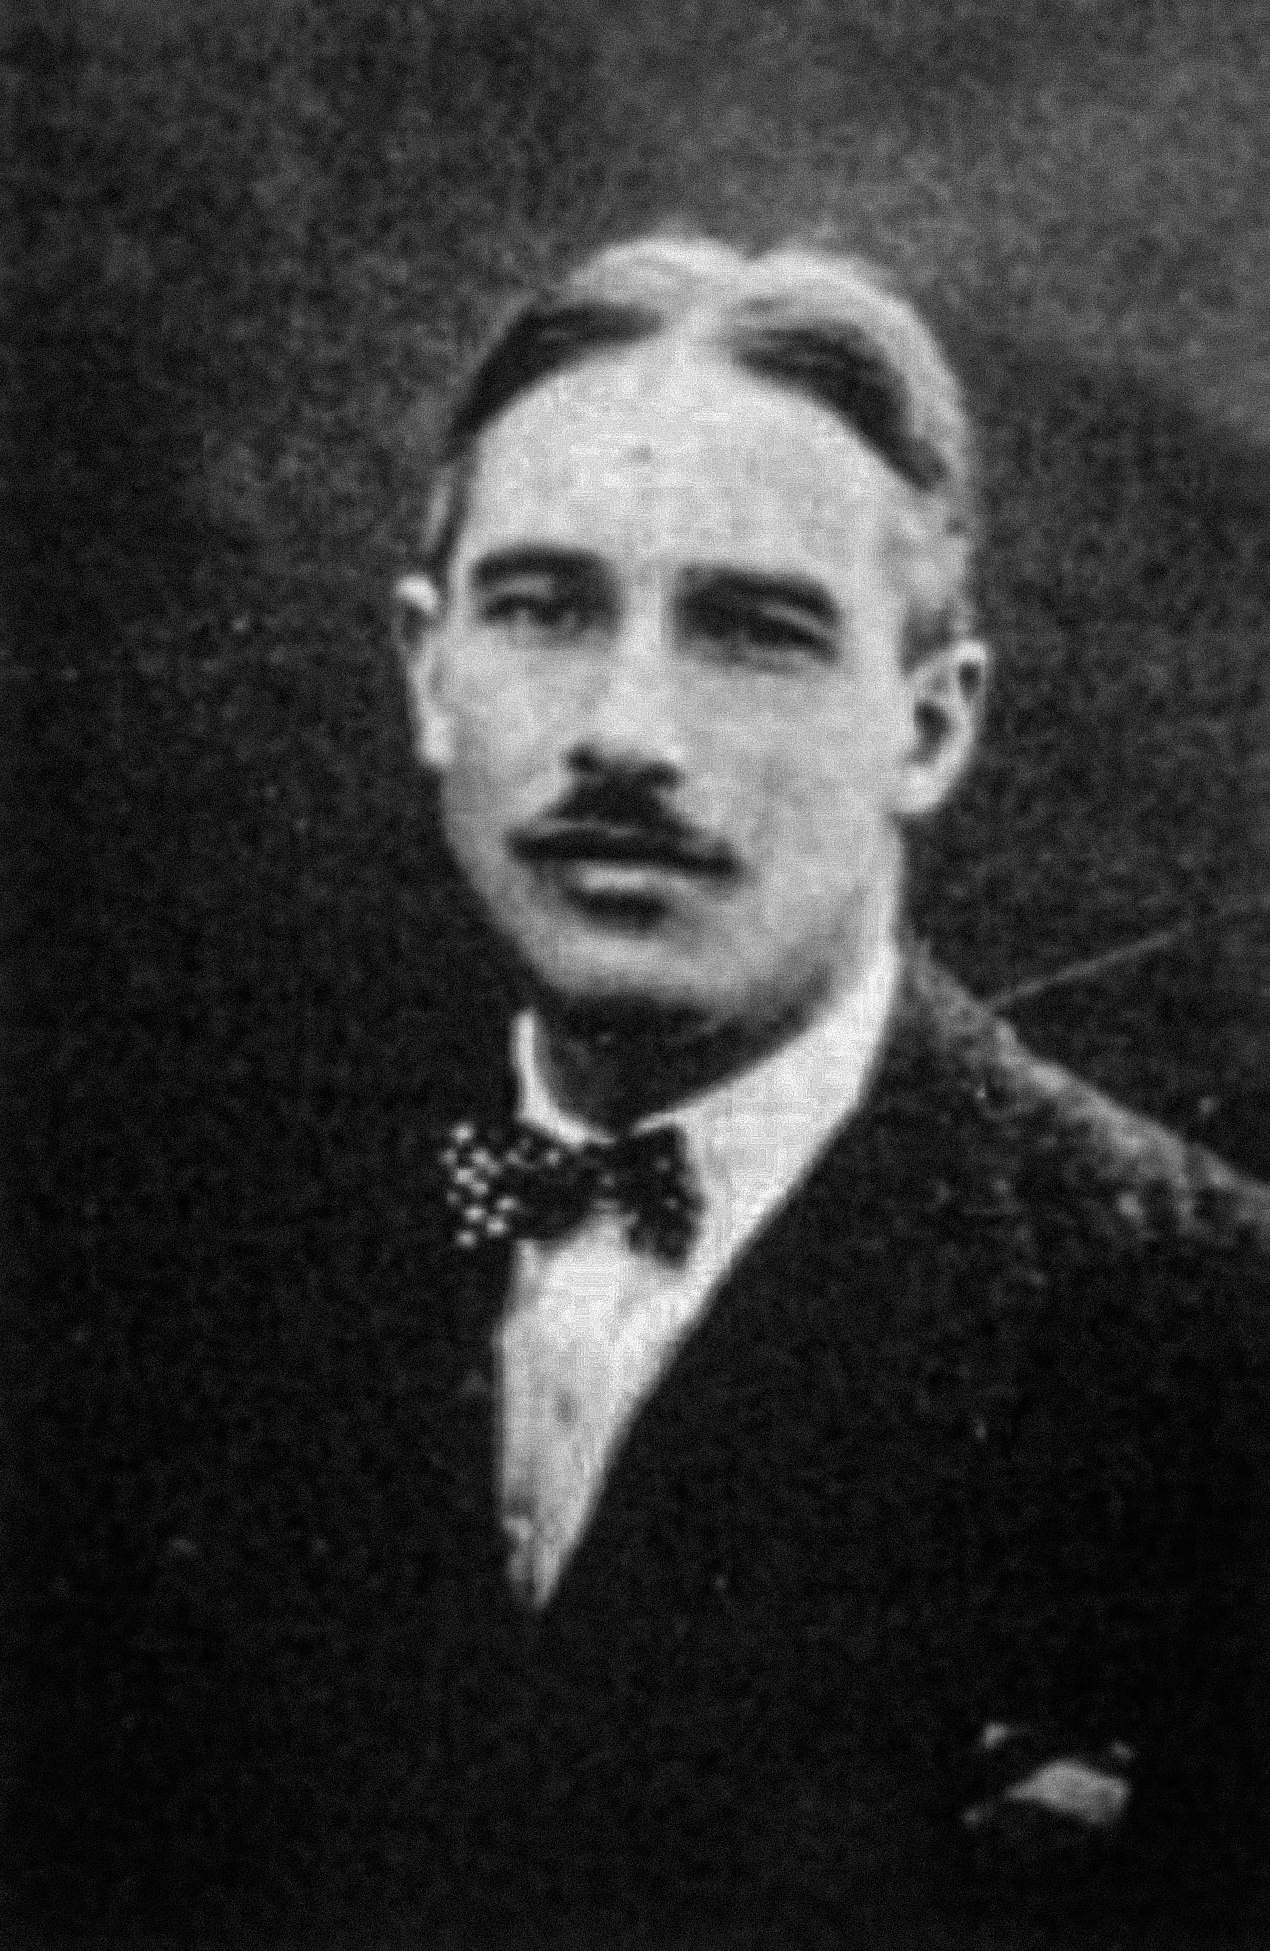 Francois de Loys (1892-1935) pea i mua i te haerenga o Venezuela 1917